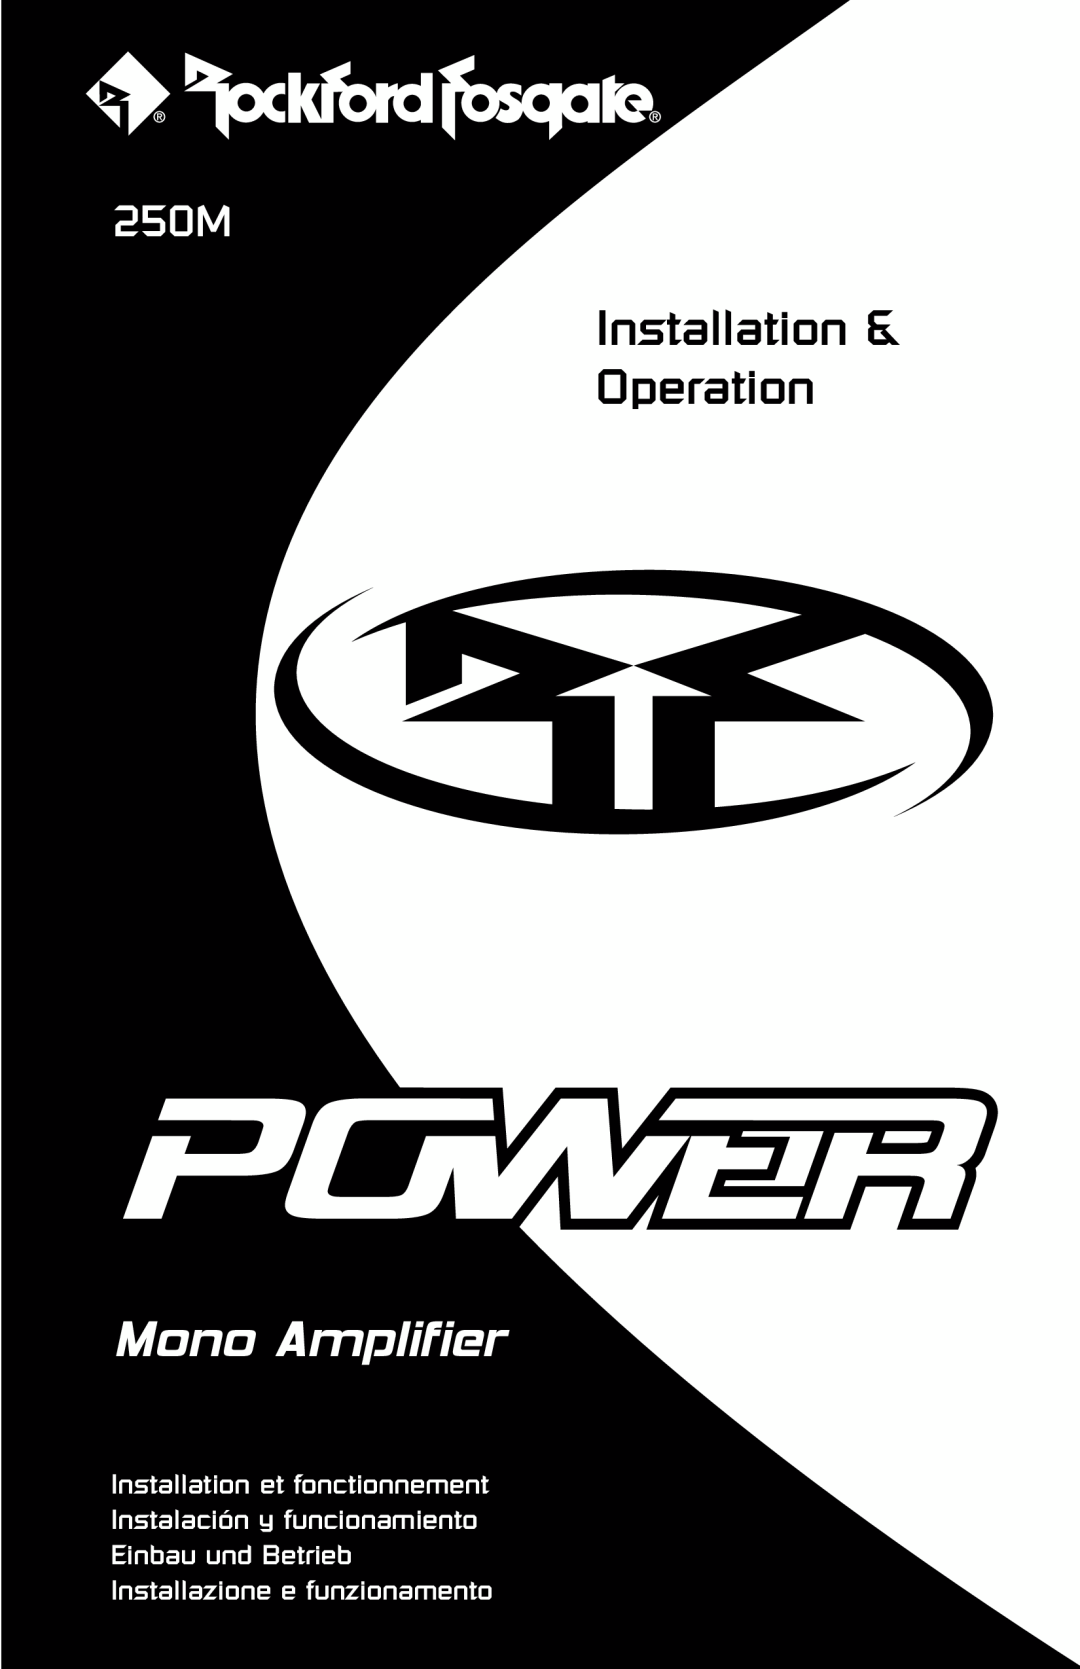 Rockford Fosgate 250M manual Mono Amplifier, Installation & Operation, Installation et fonctionnement 